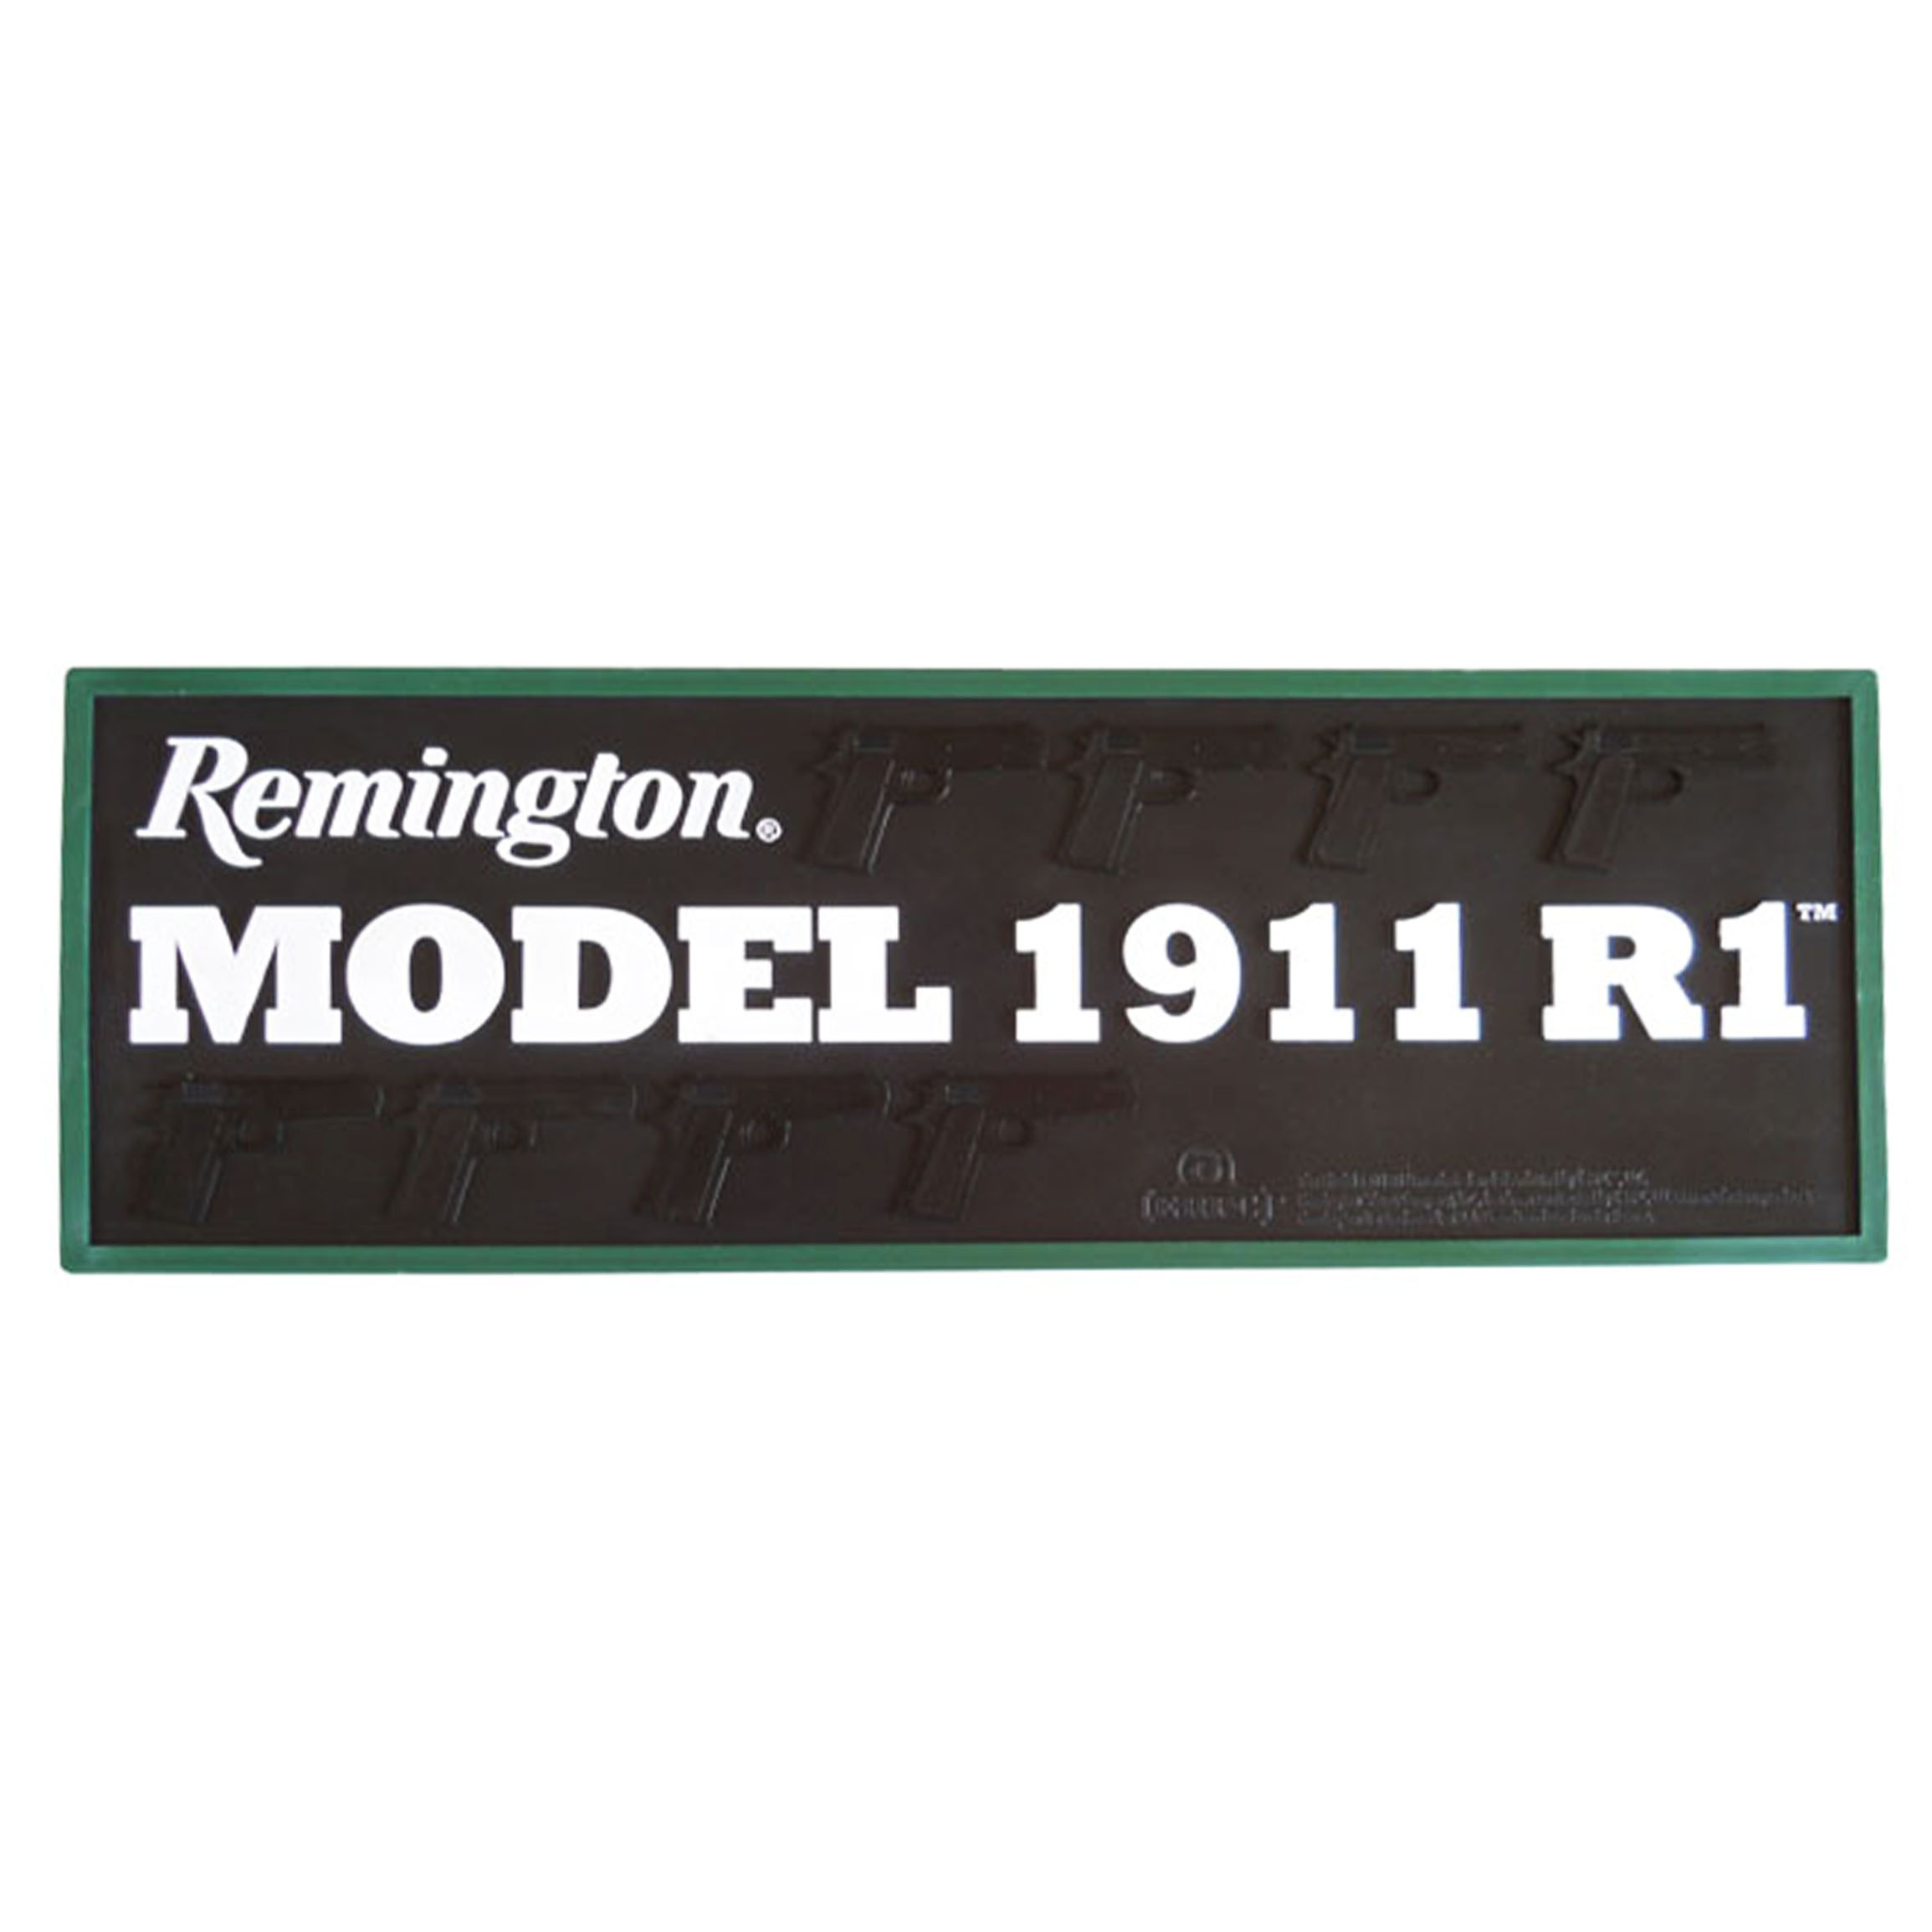 Remington Model 1911 r1 counter display mat